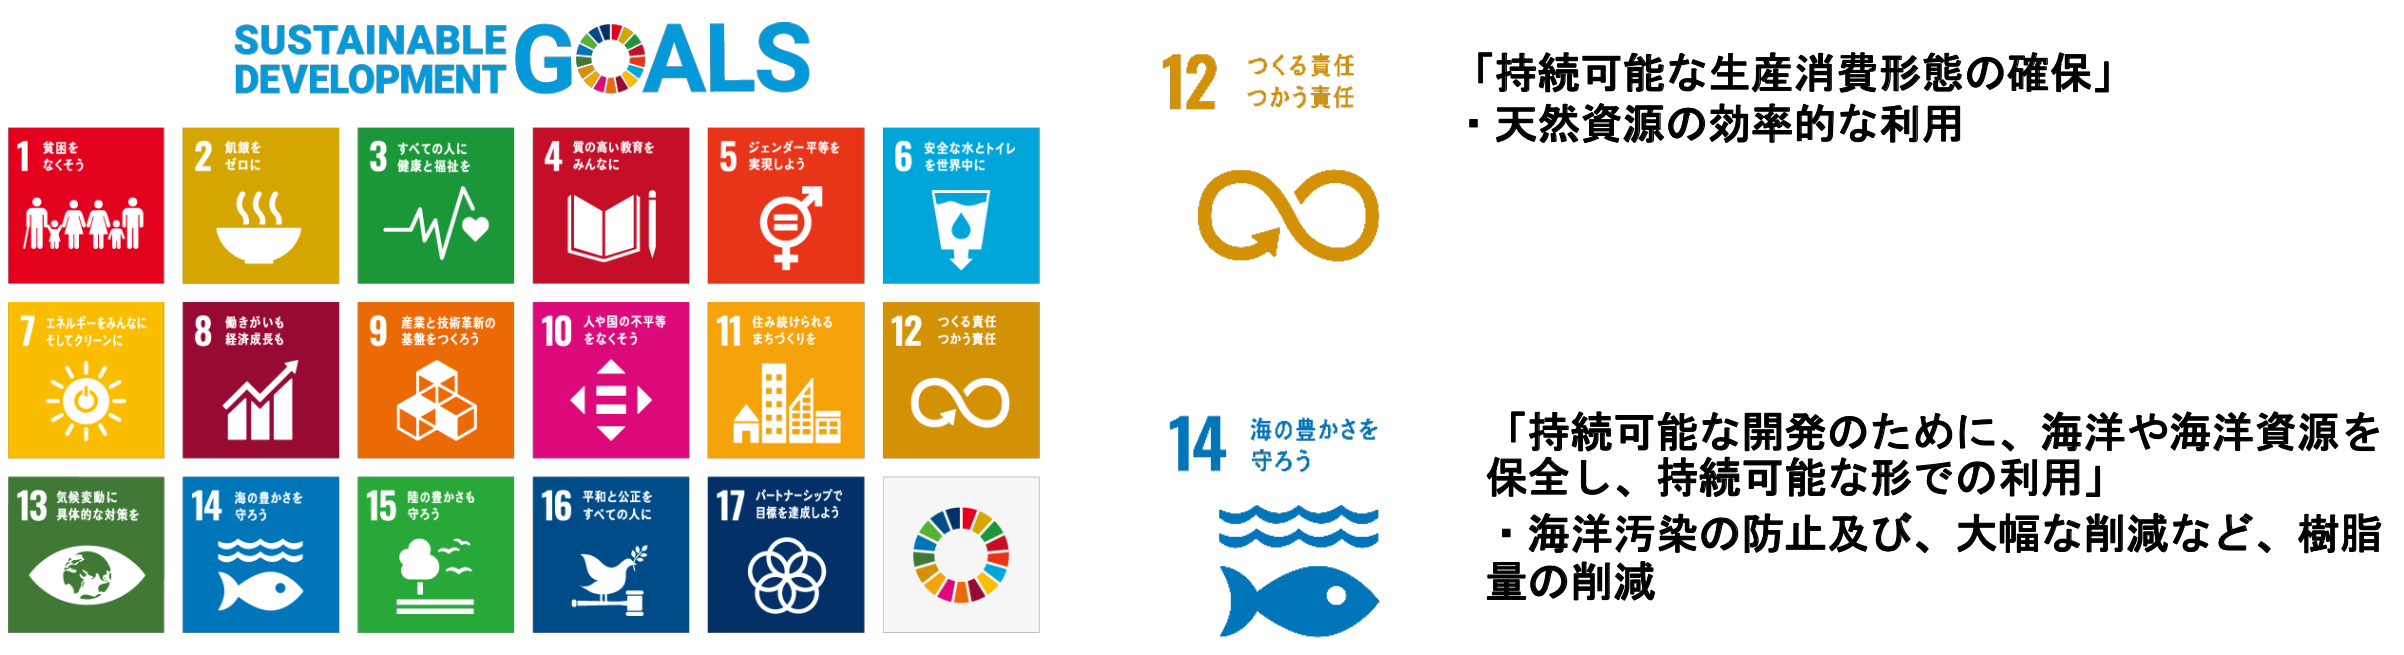 SDGs(持続可能な開発目標)の達成